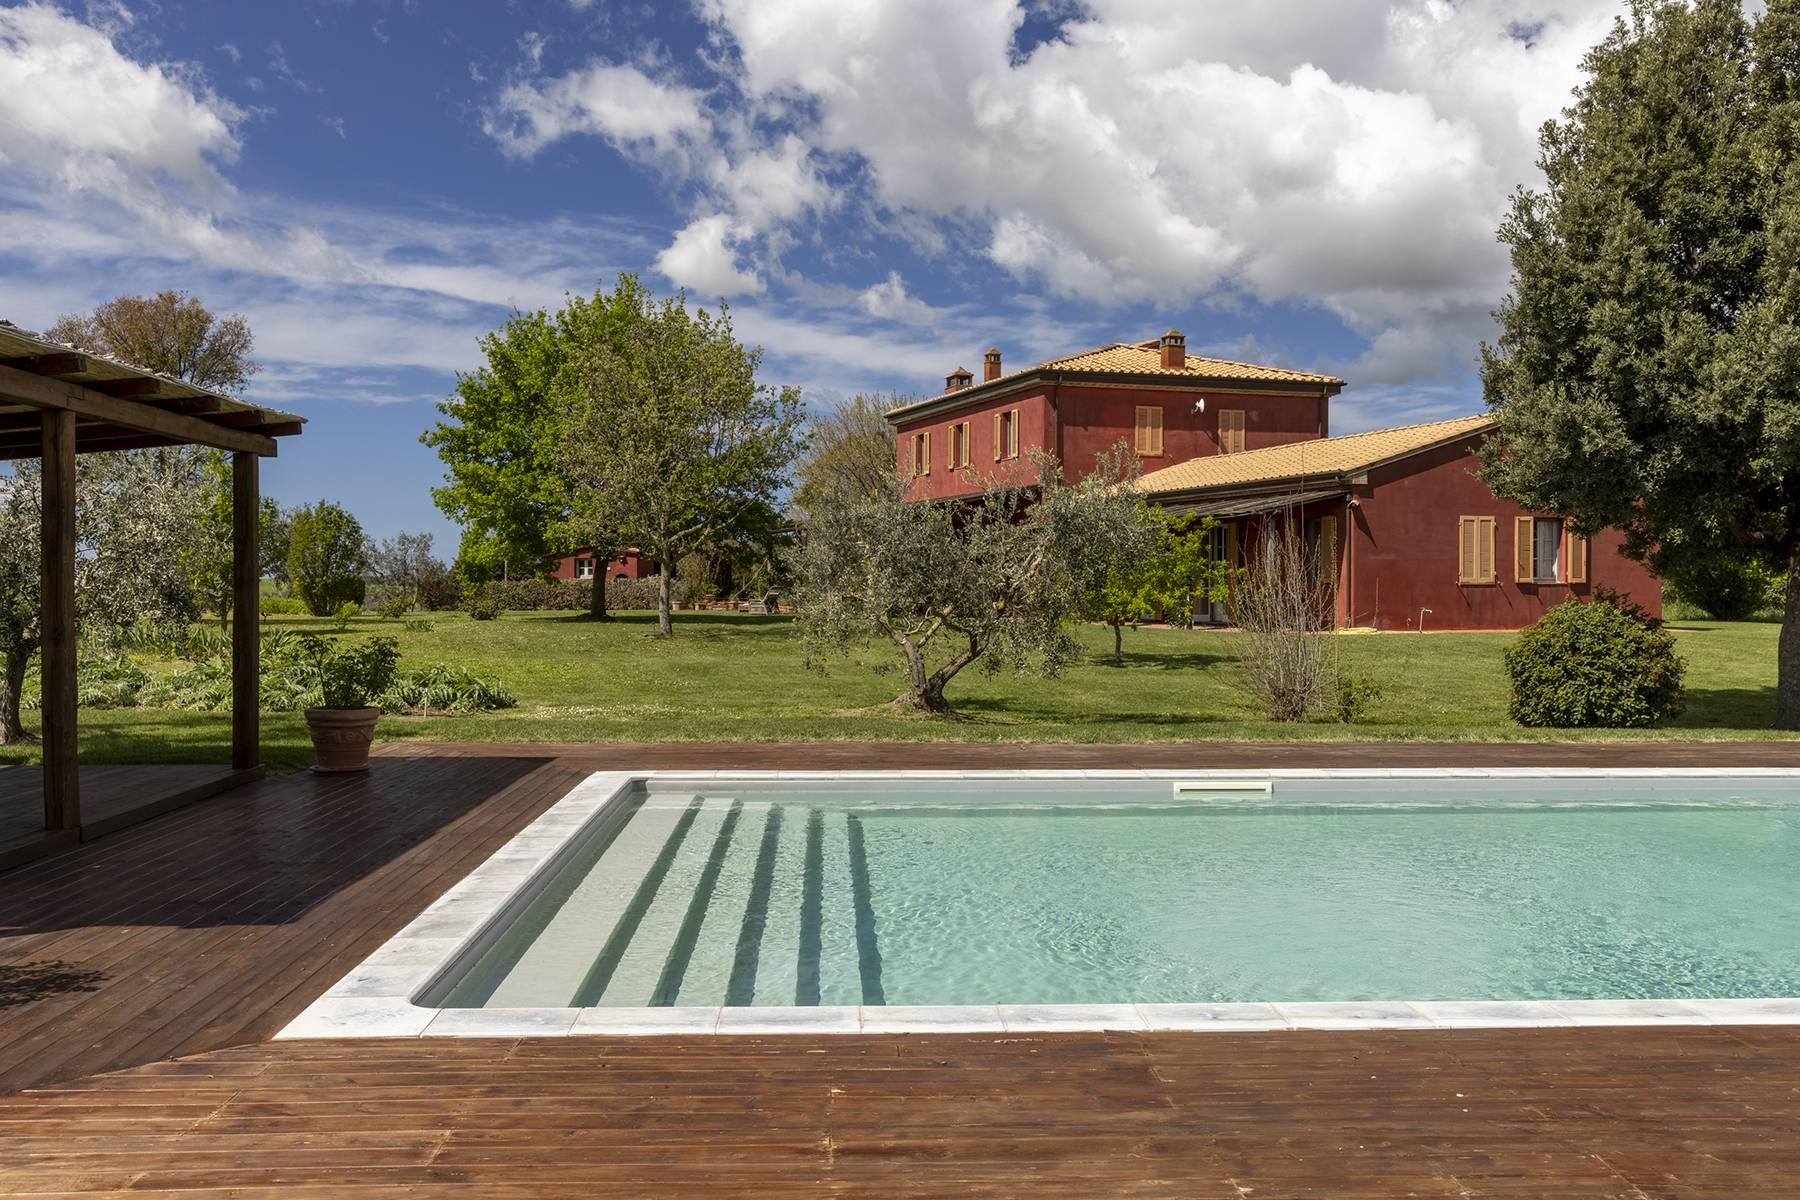 Magliano in Toscana, villa with swimming pool - 1